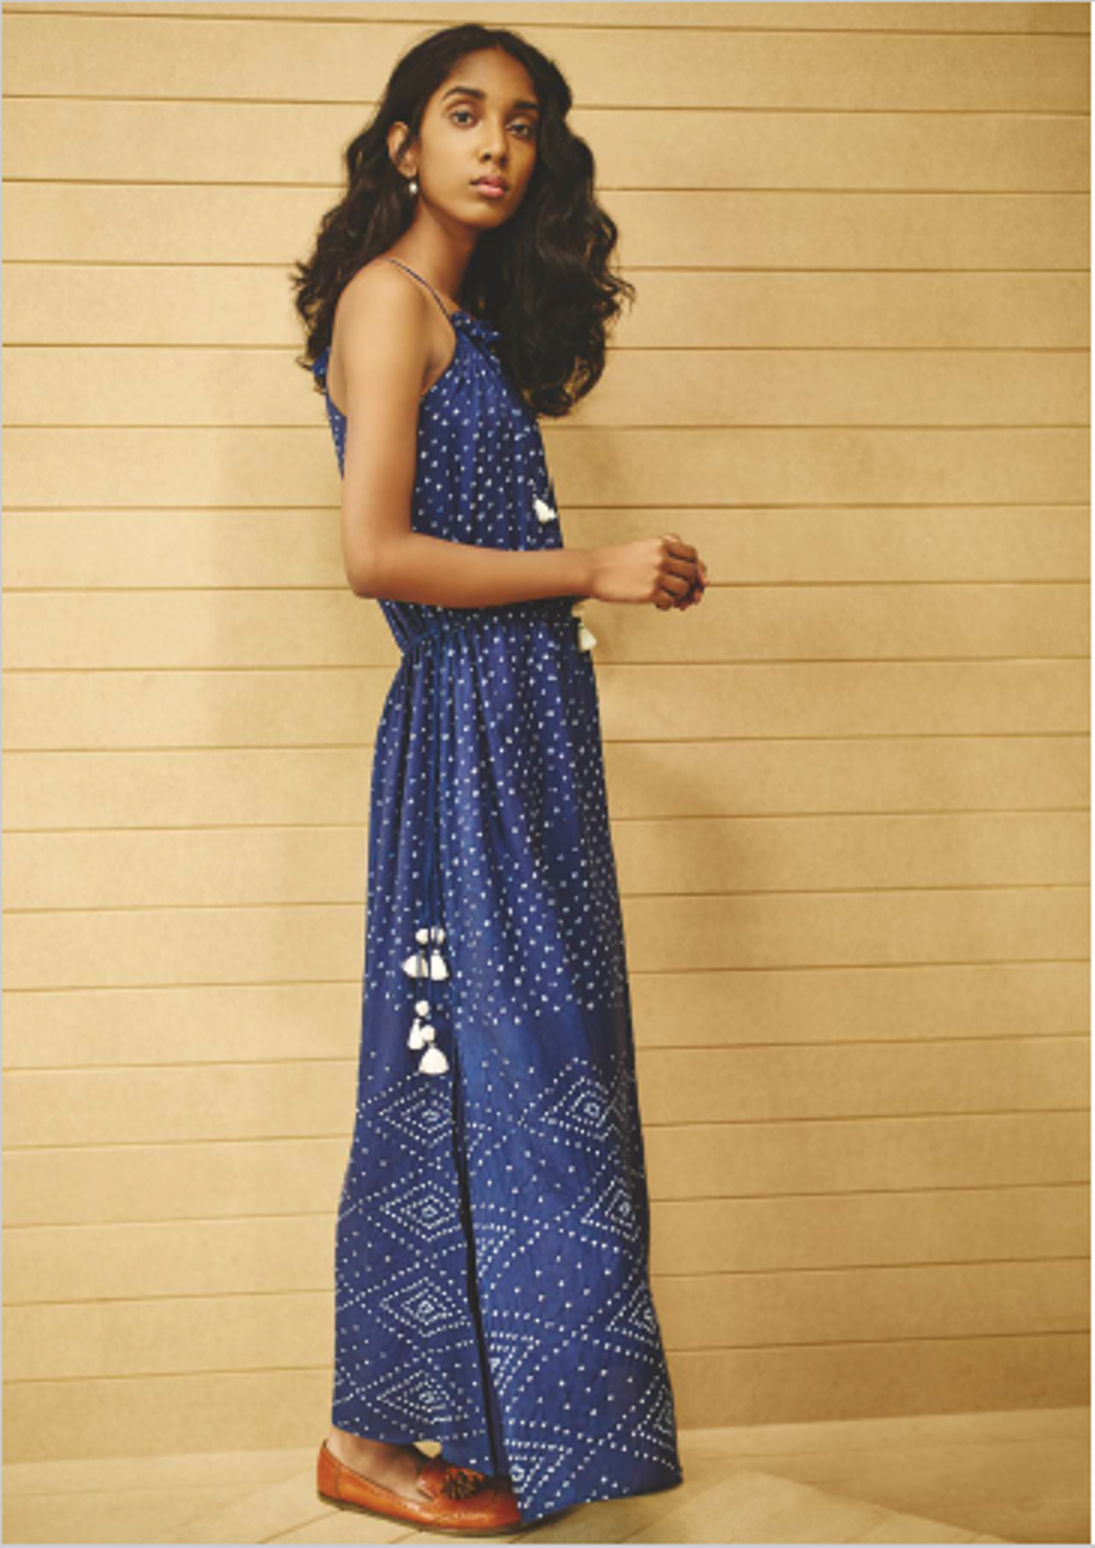  Aditi Rao Hydari Looked Easy-Breezy In Anita Dongre’s Designer Summer Dress